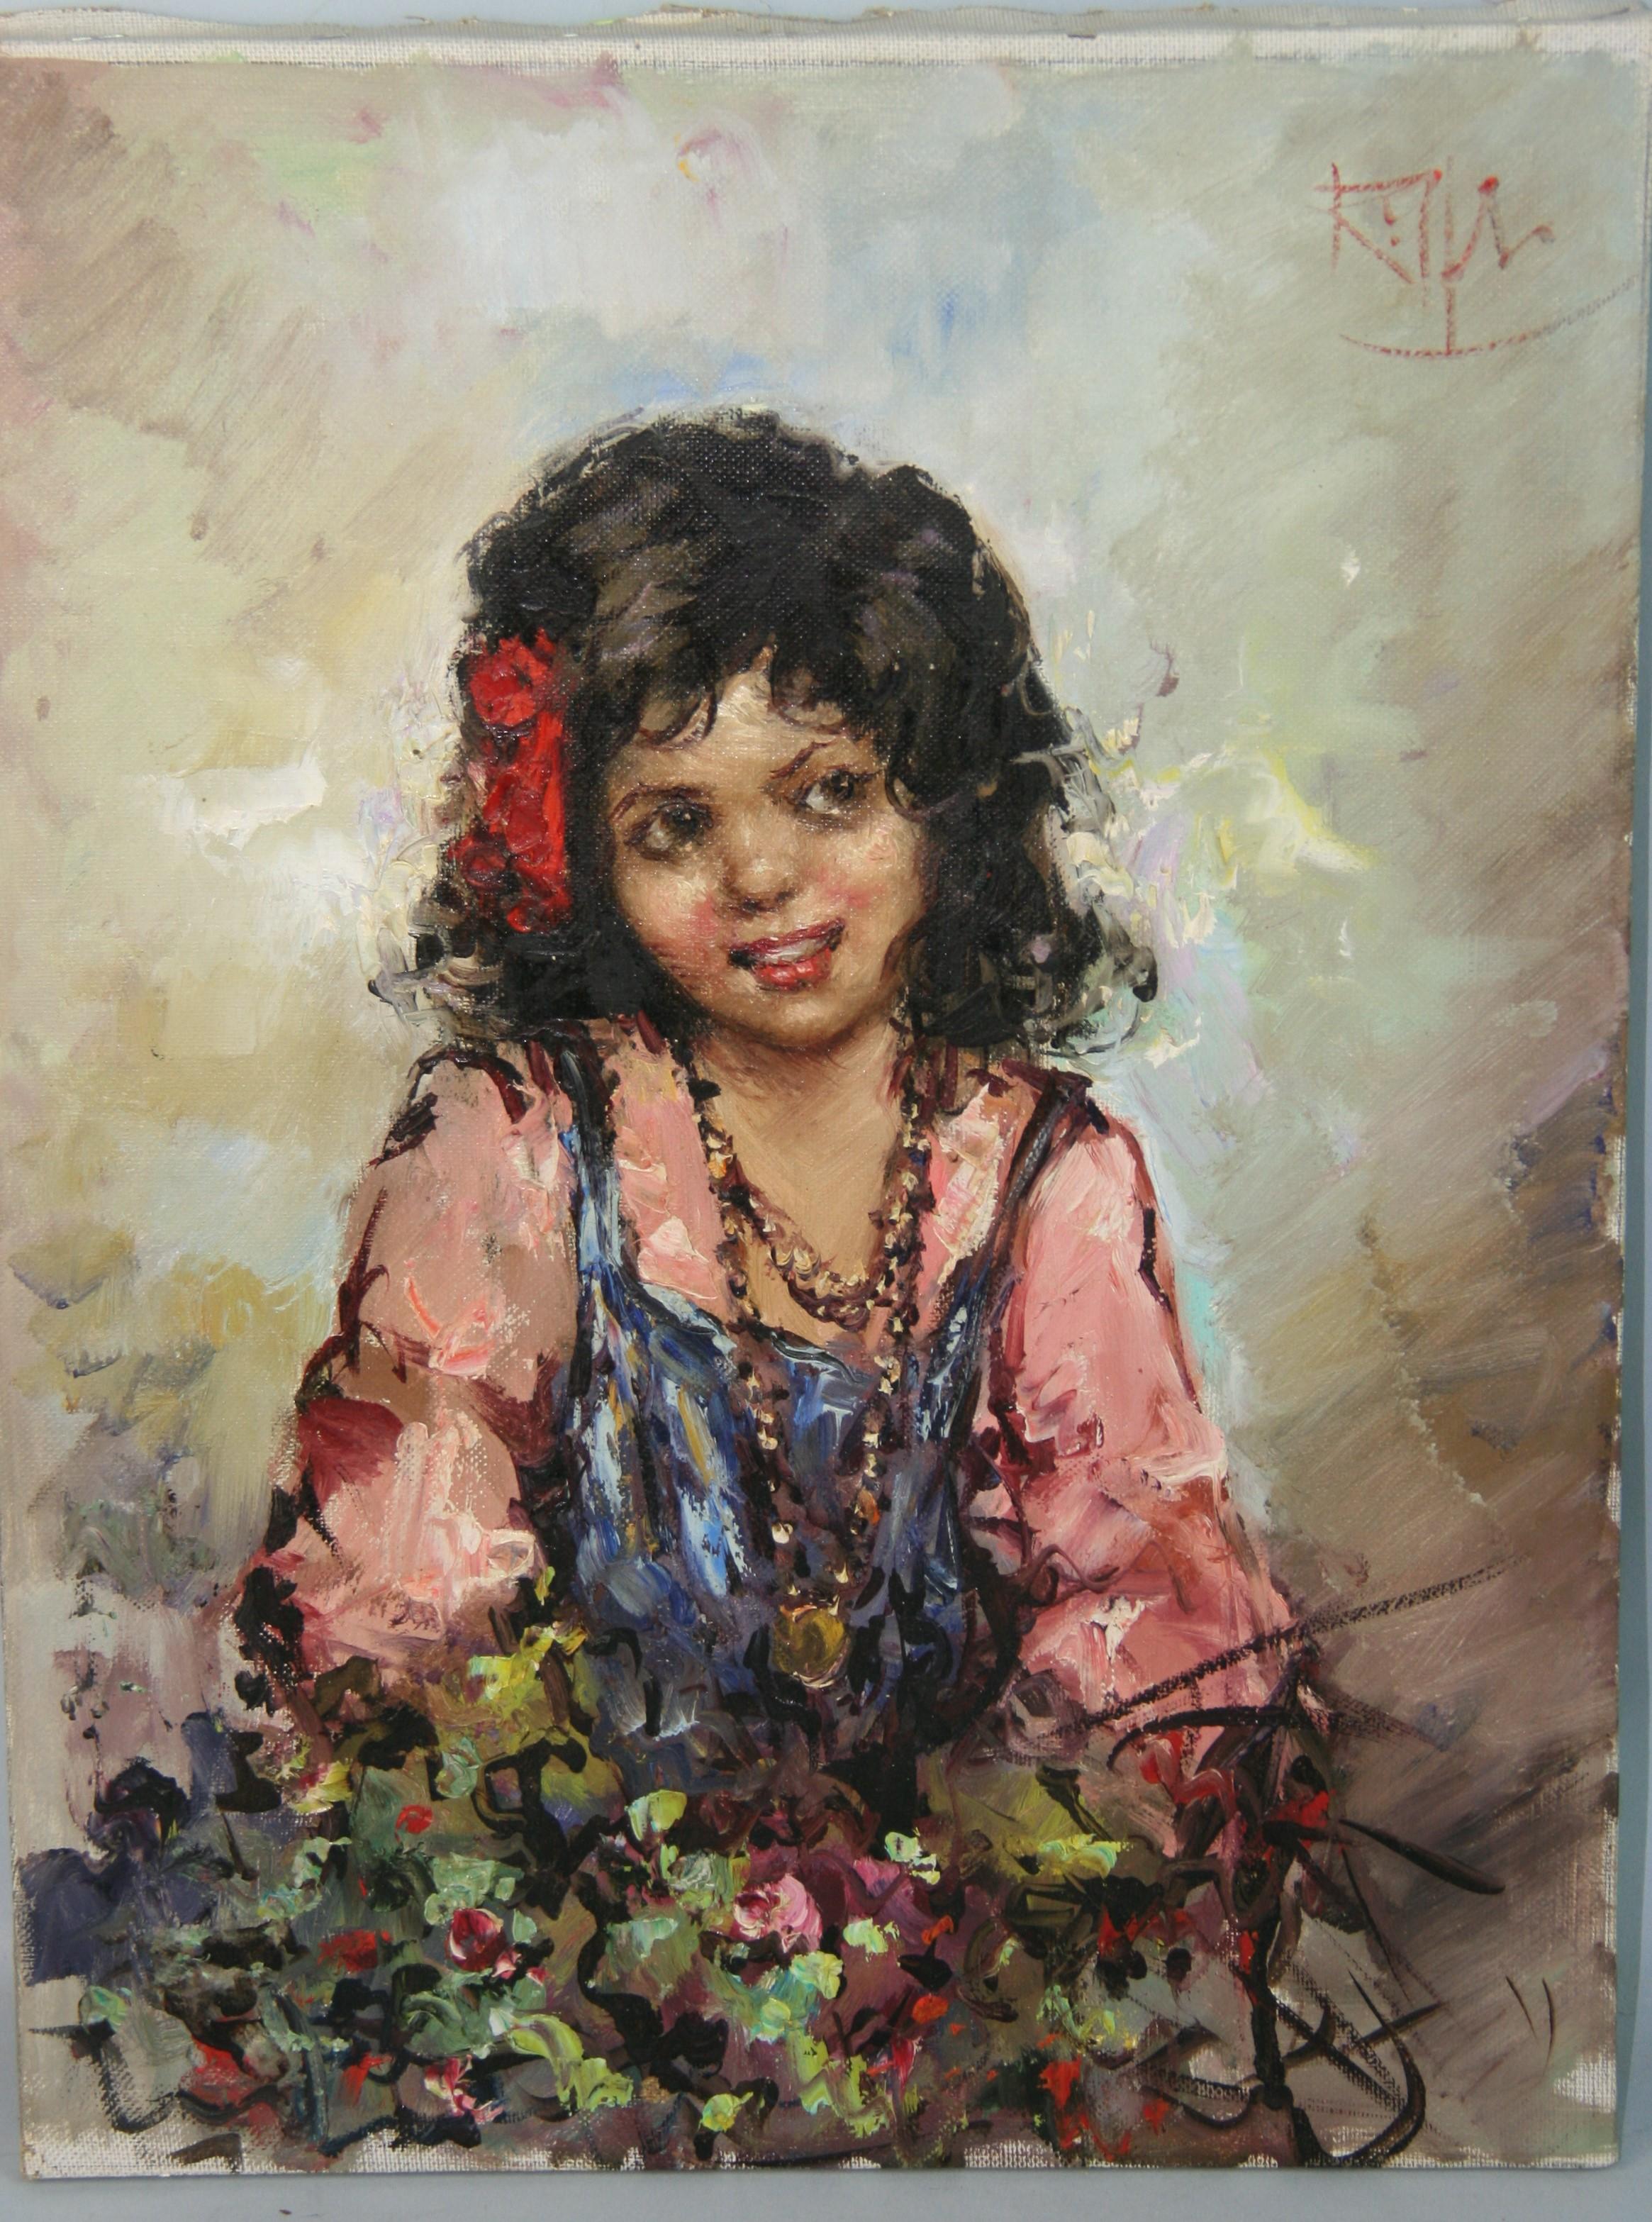 5045 Vintage colorful oil on canvas of a Neapolital girl flower seller.
Unframed
Signed upper right